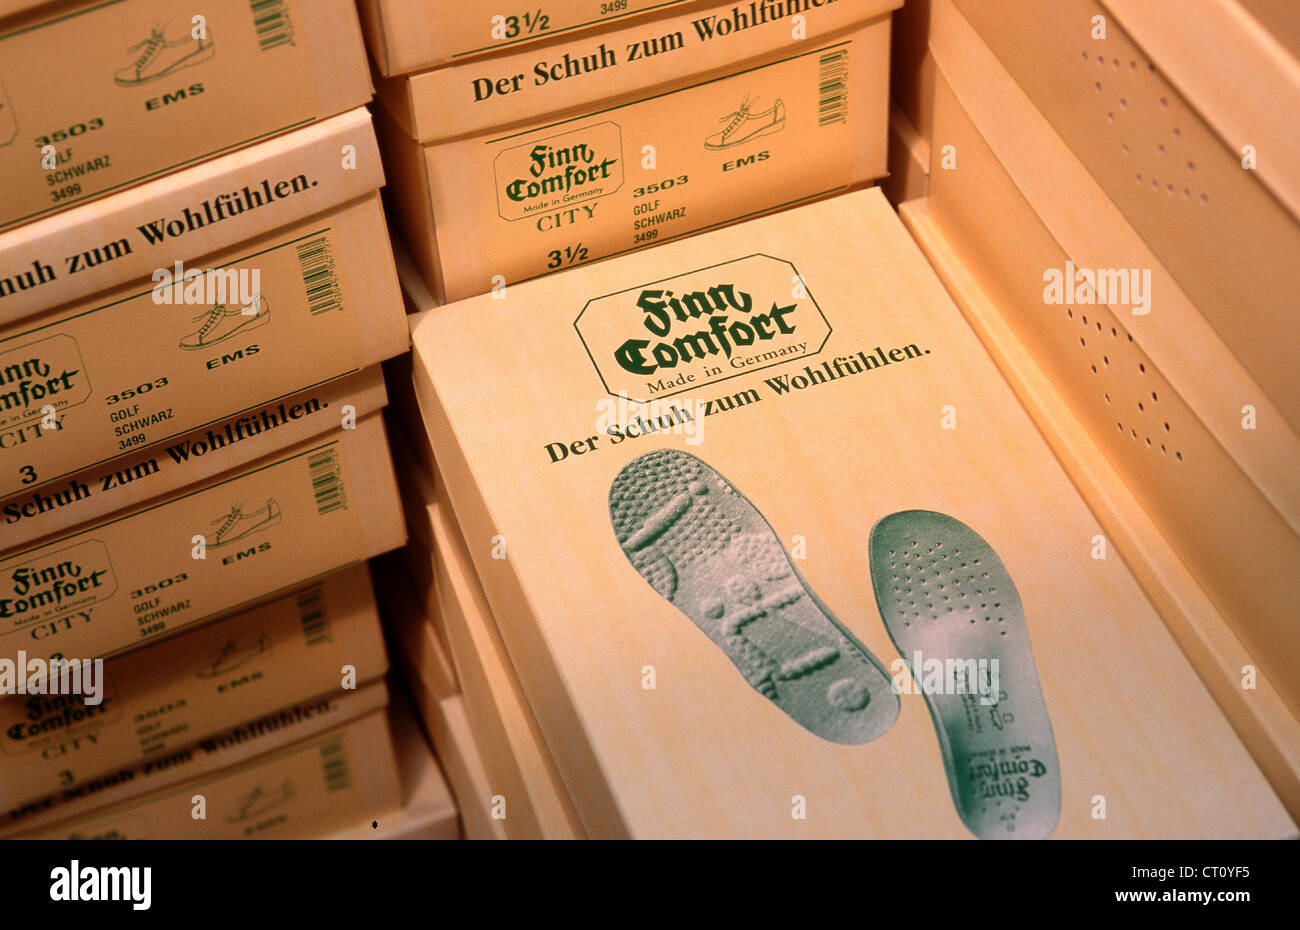 Boxes of Finn Comfort shoes, shoe factory WALDI Stock Photo - Alamy